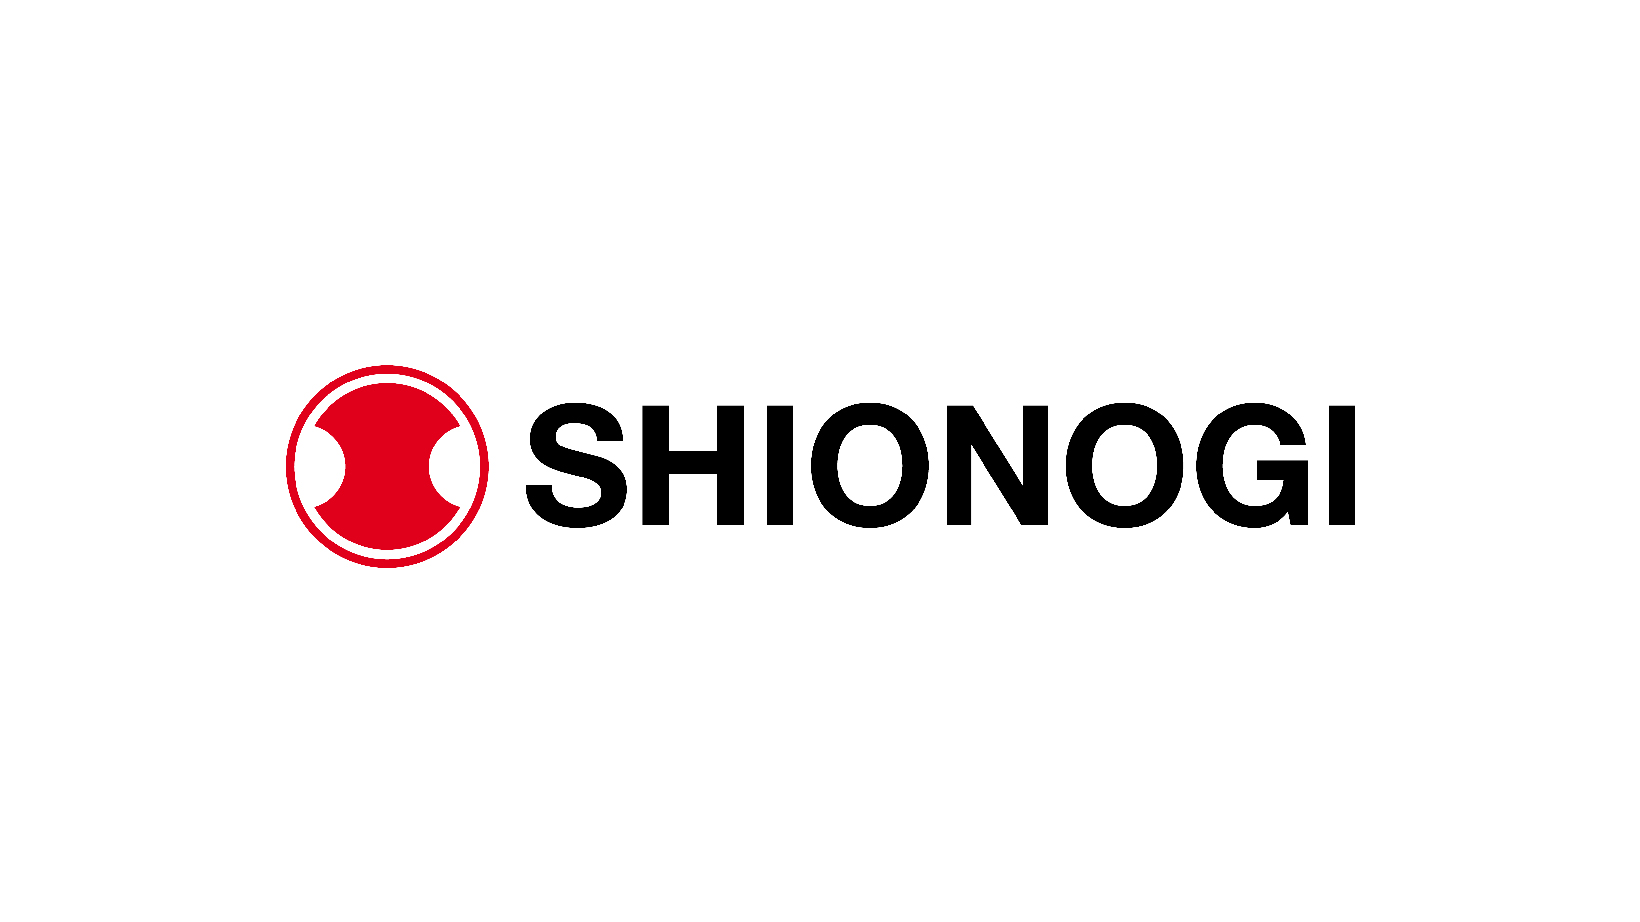 Shionogi takes space at Fifty Paddington